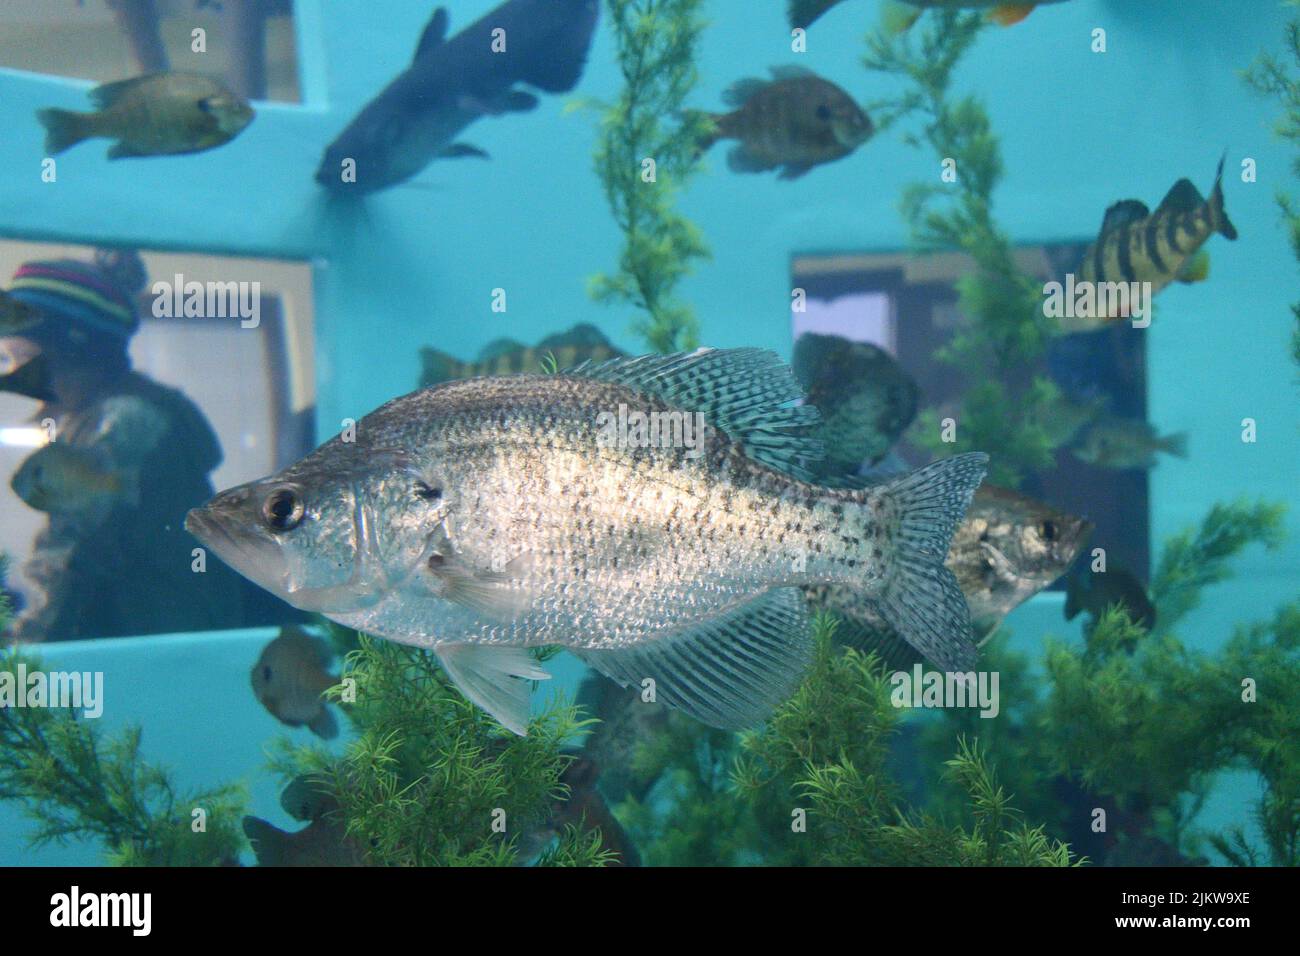 A closeup of the fish in an aquarium. Stock Photo